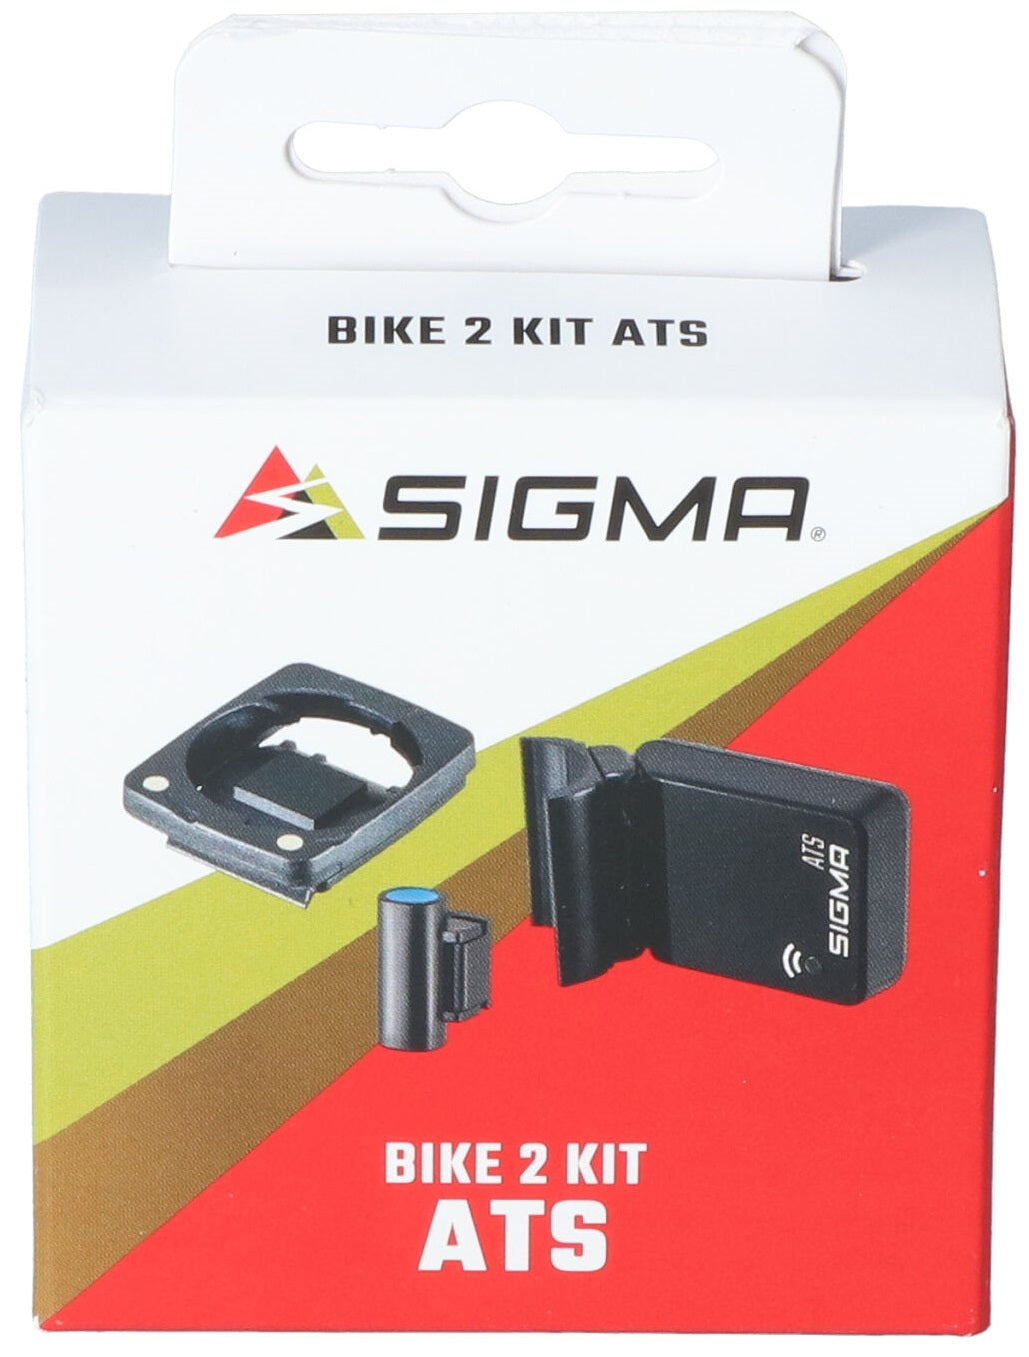 Snelheidszenderset Sigma ATS (sensor + magneet + houder)